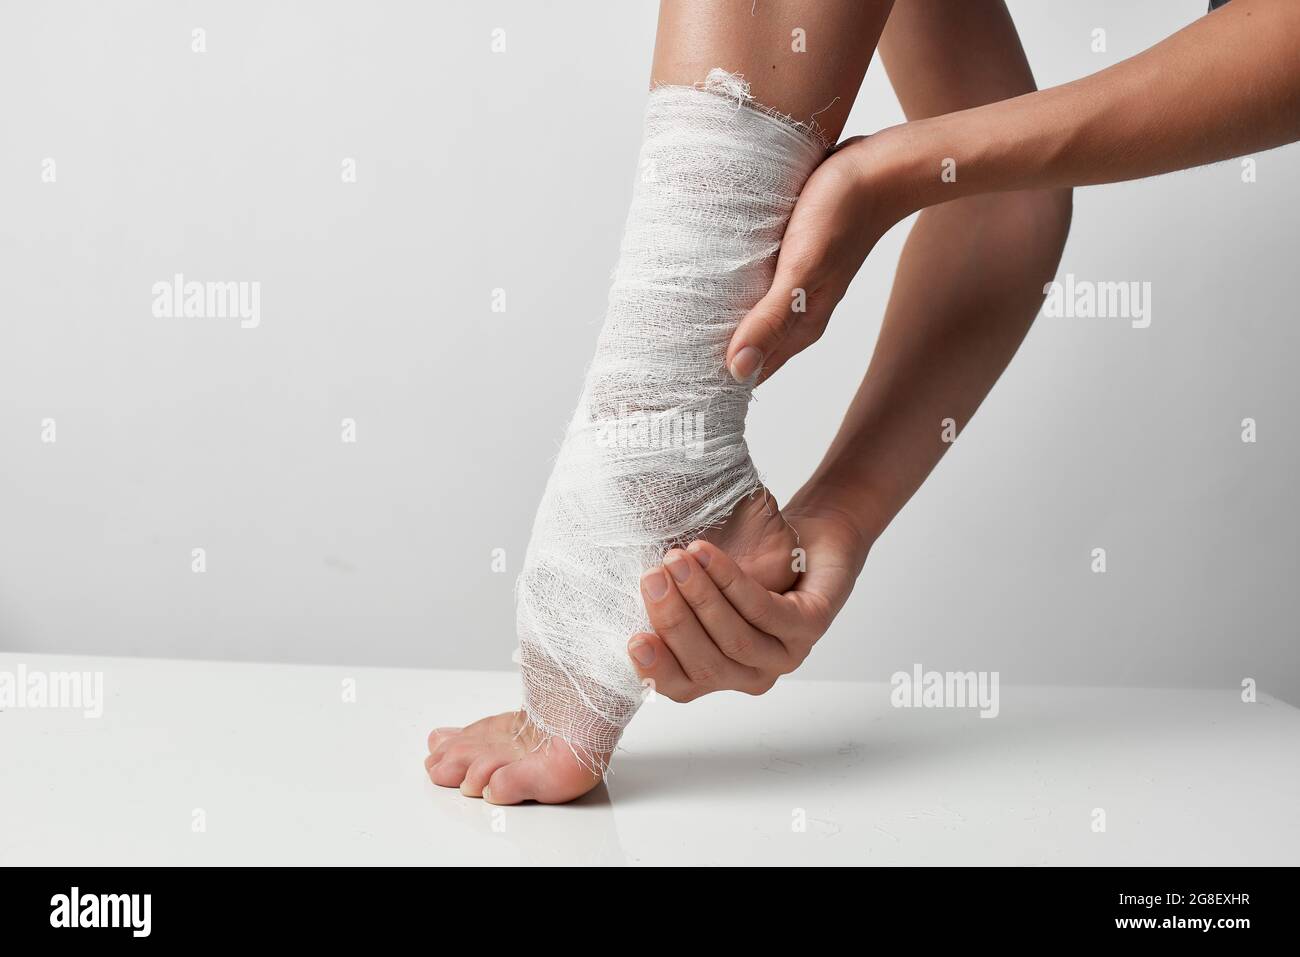 bandaged leg health problems psychotherapy Stock Photo - Alamy